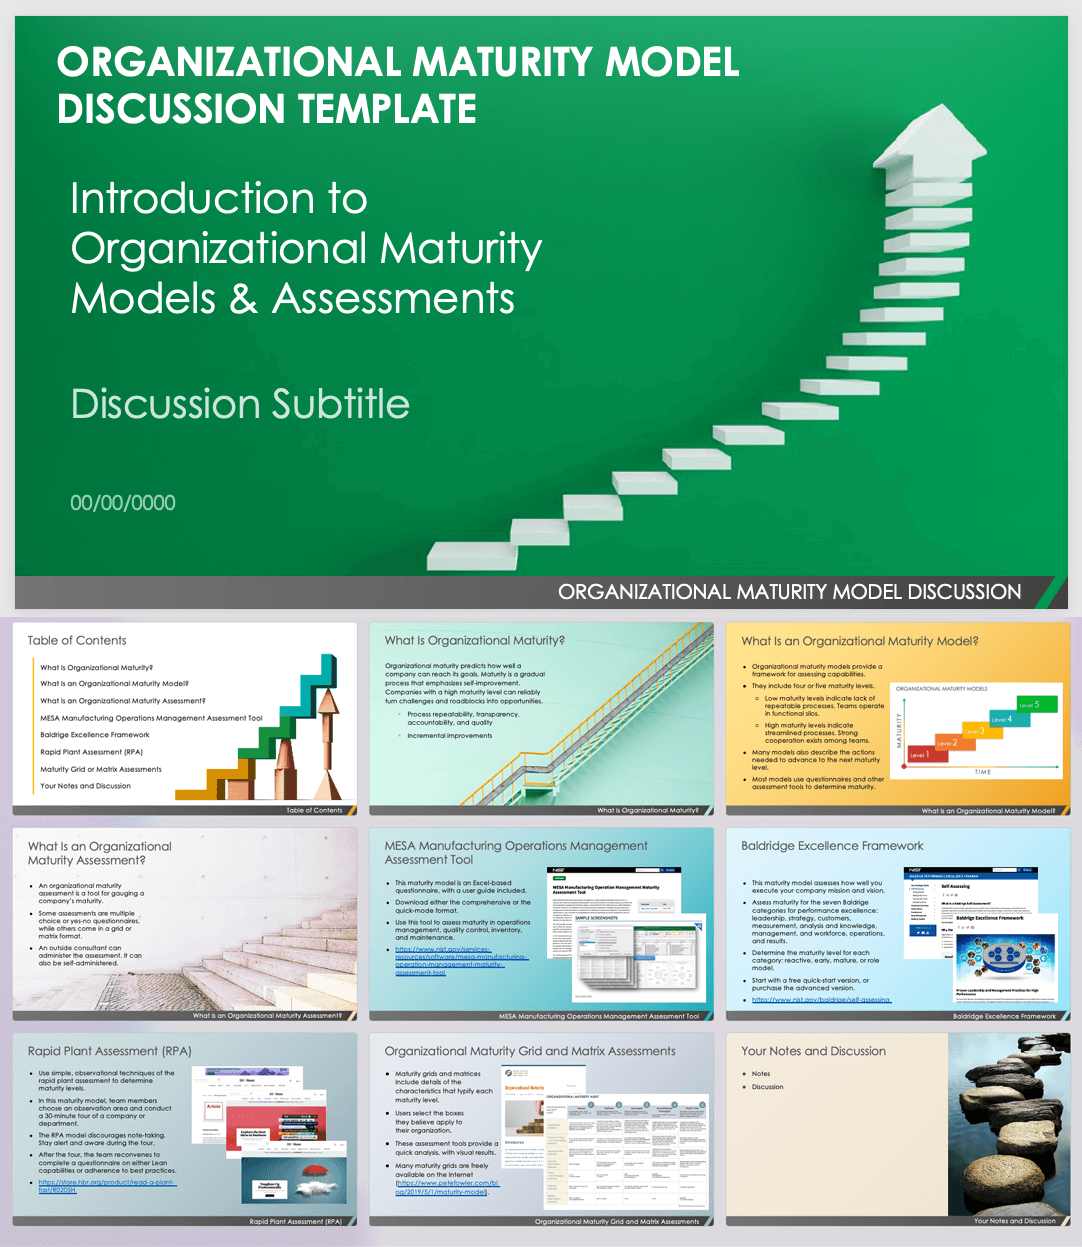 Organizational Maturity Model Discussion Template